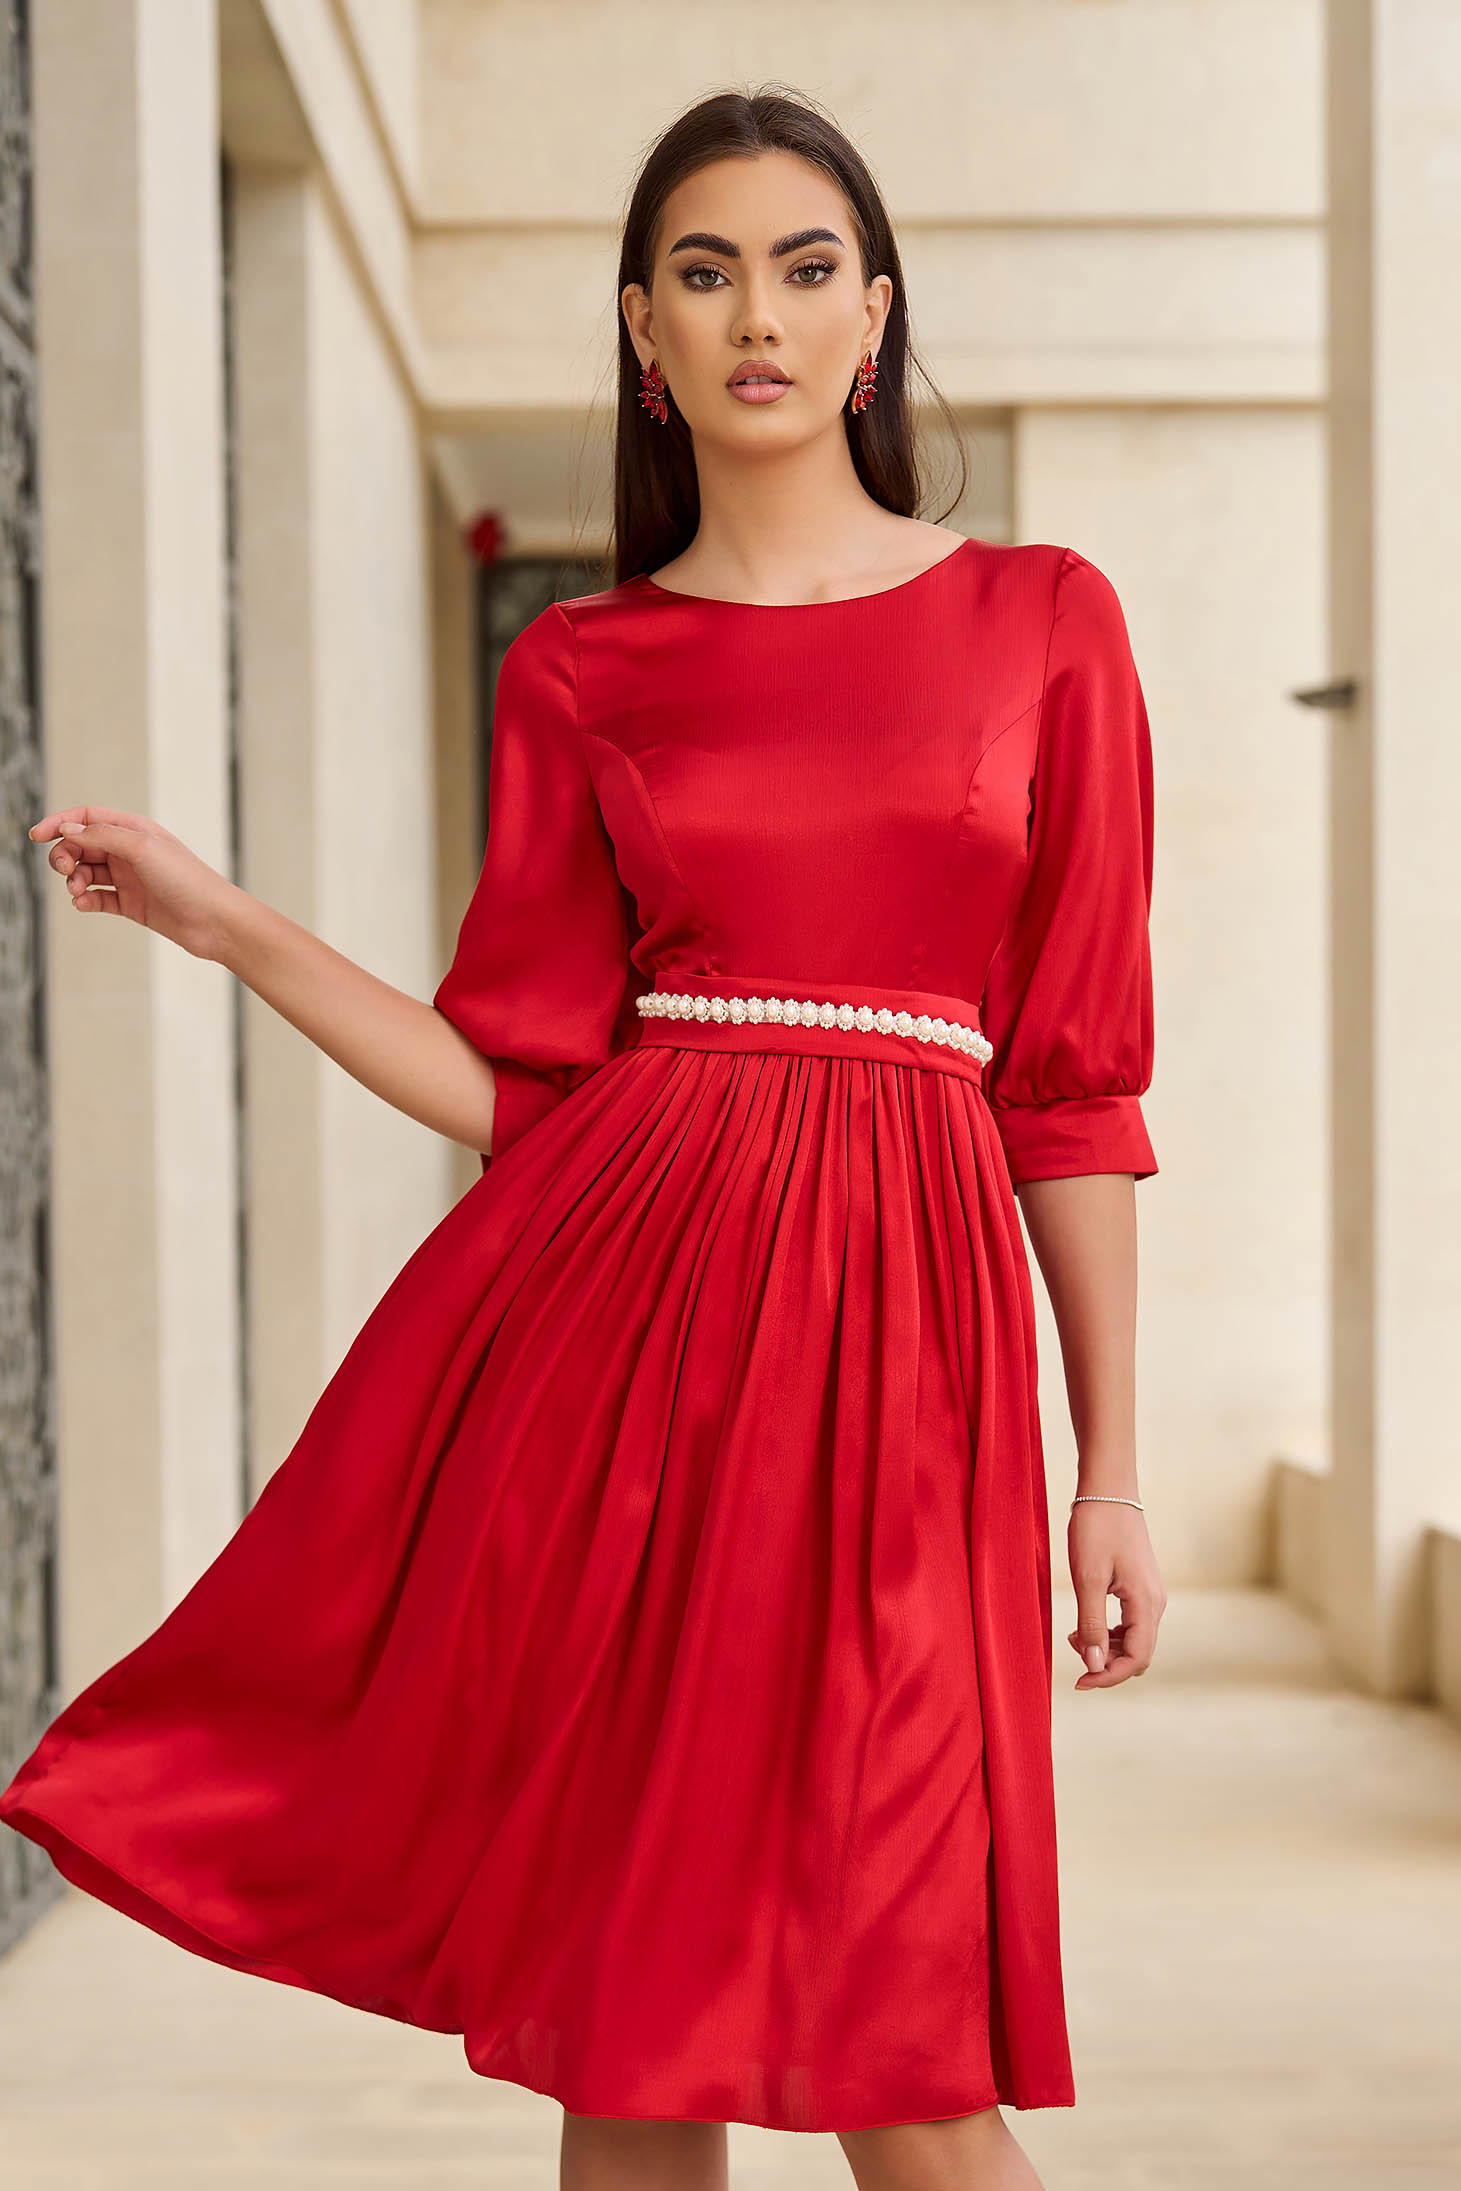 Red Satin Midi Dress with Pearl Appliqués on Ribbon - StarShinerS